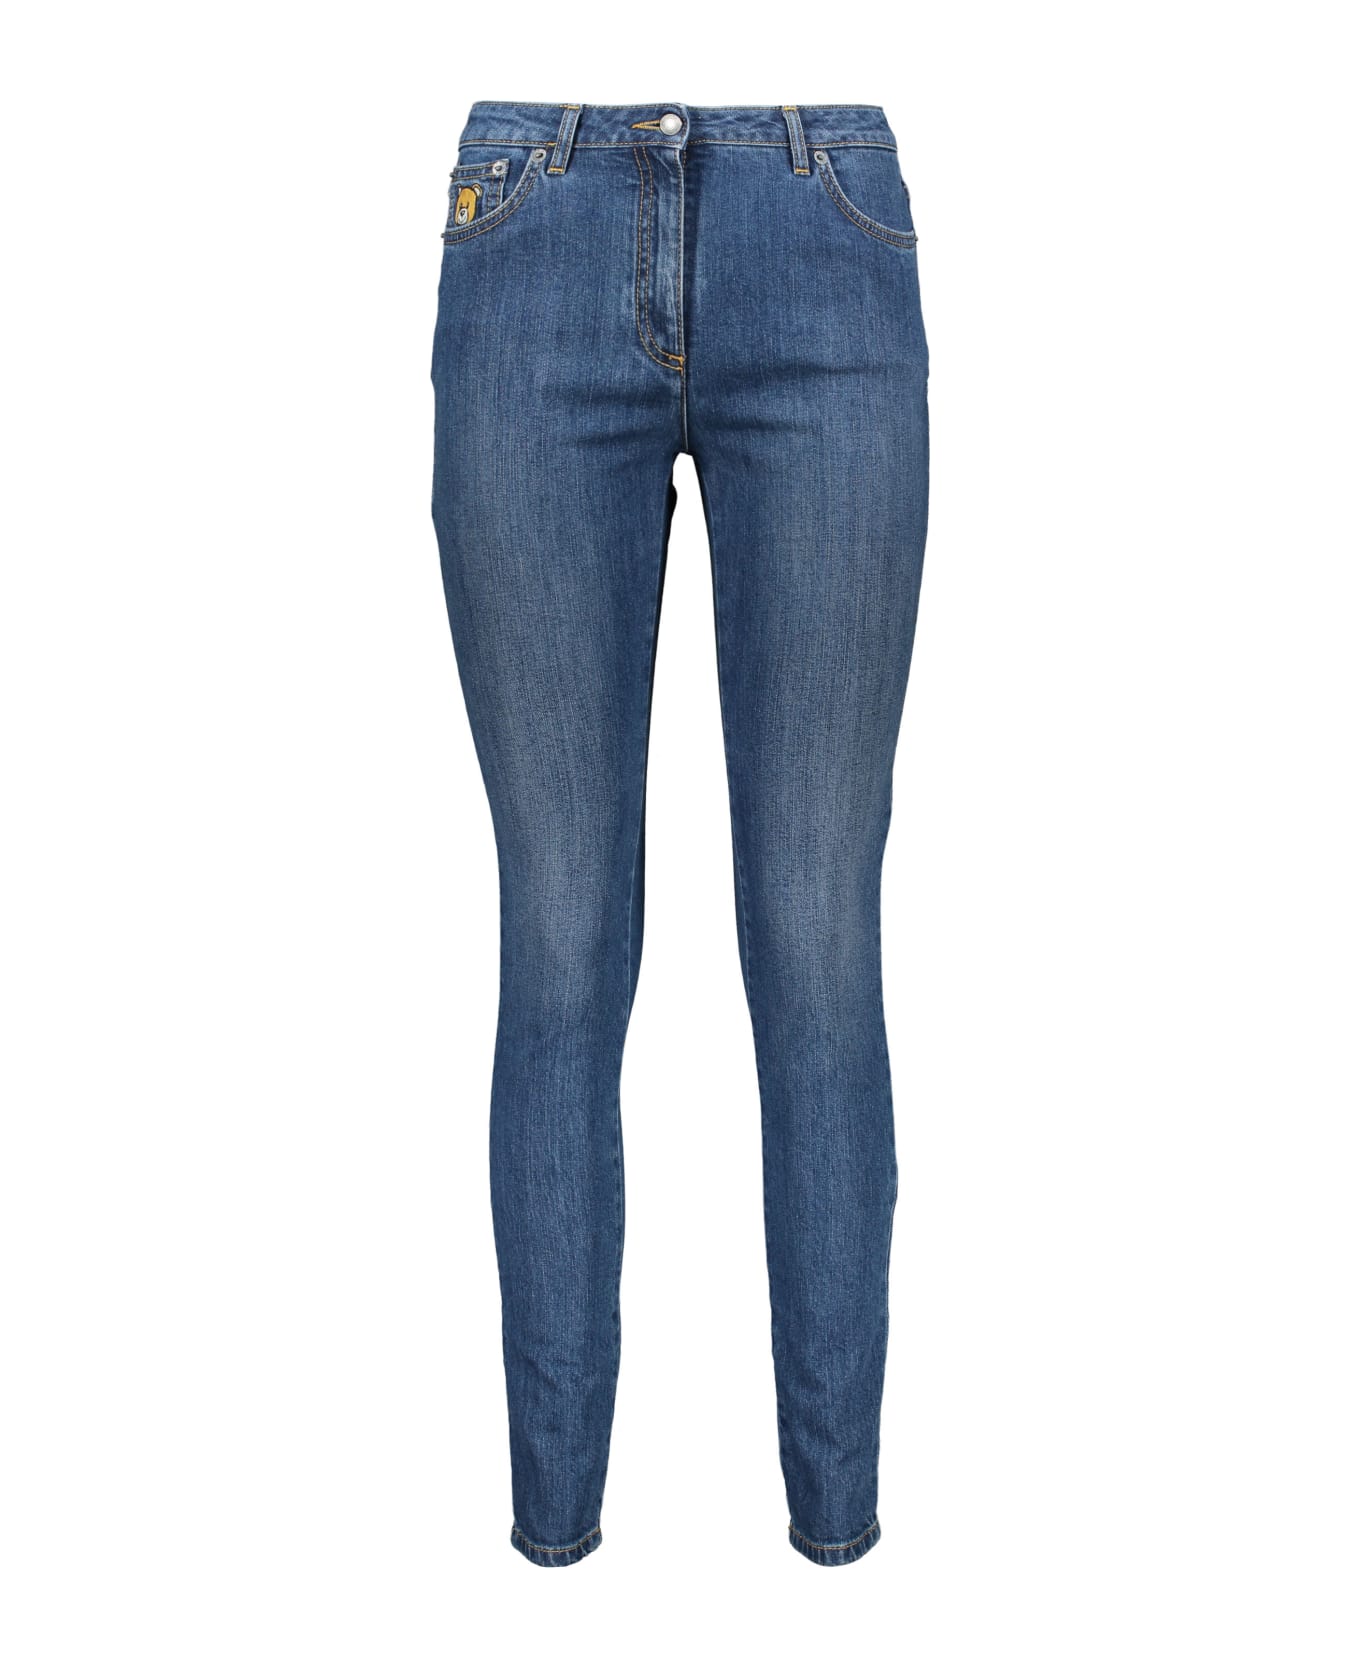 Moschino 5-pocket Skinny Jeans - Denim